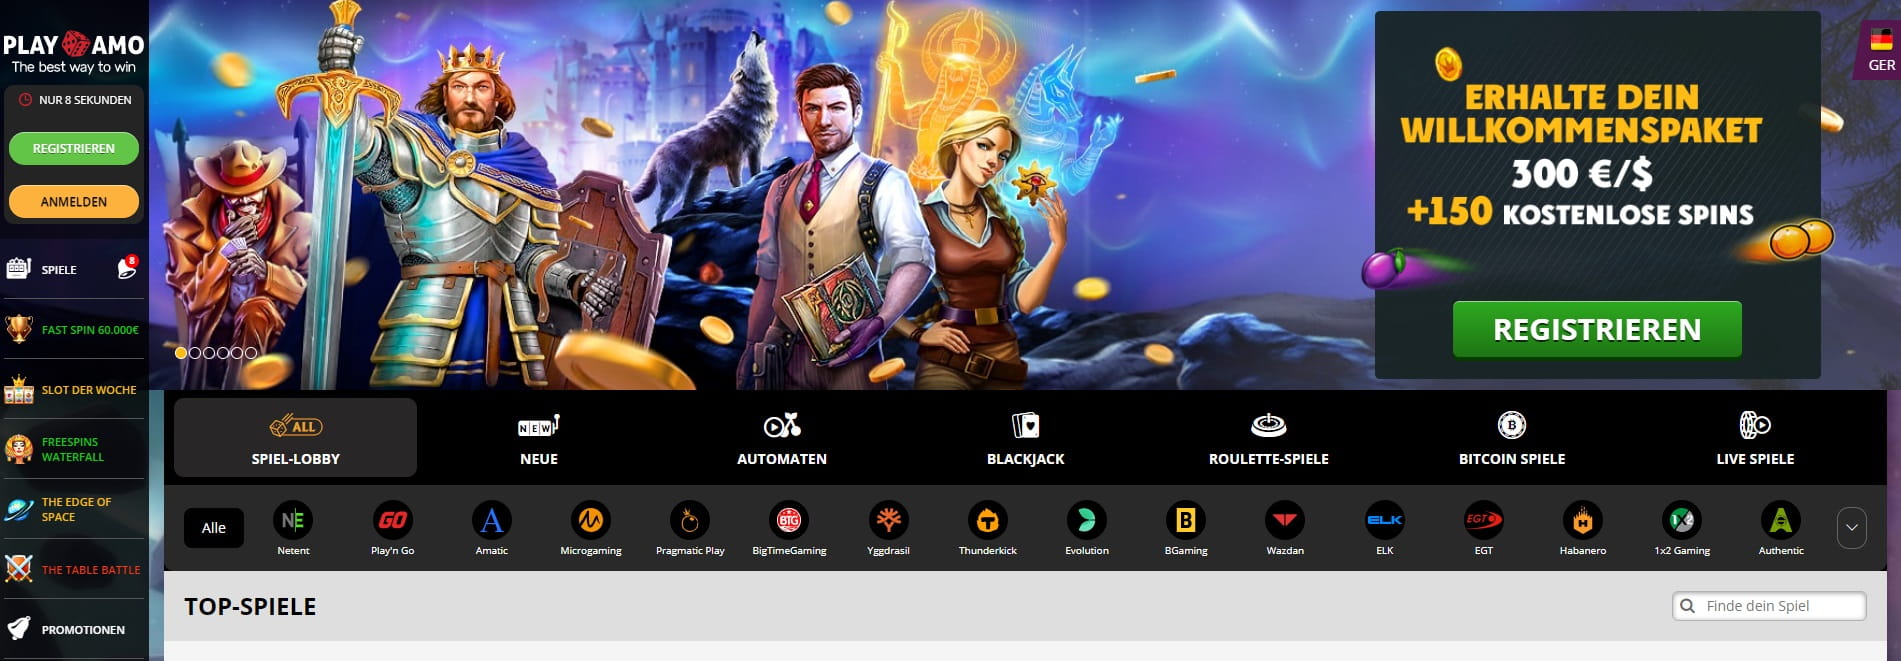 Homepage des PlayAmo Casino mit Bonus